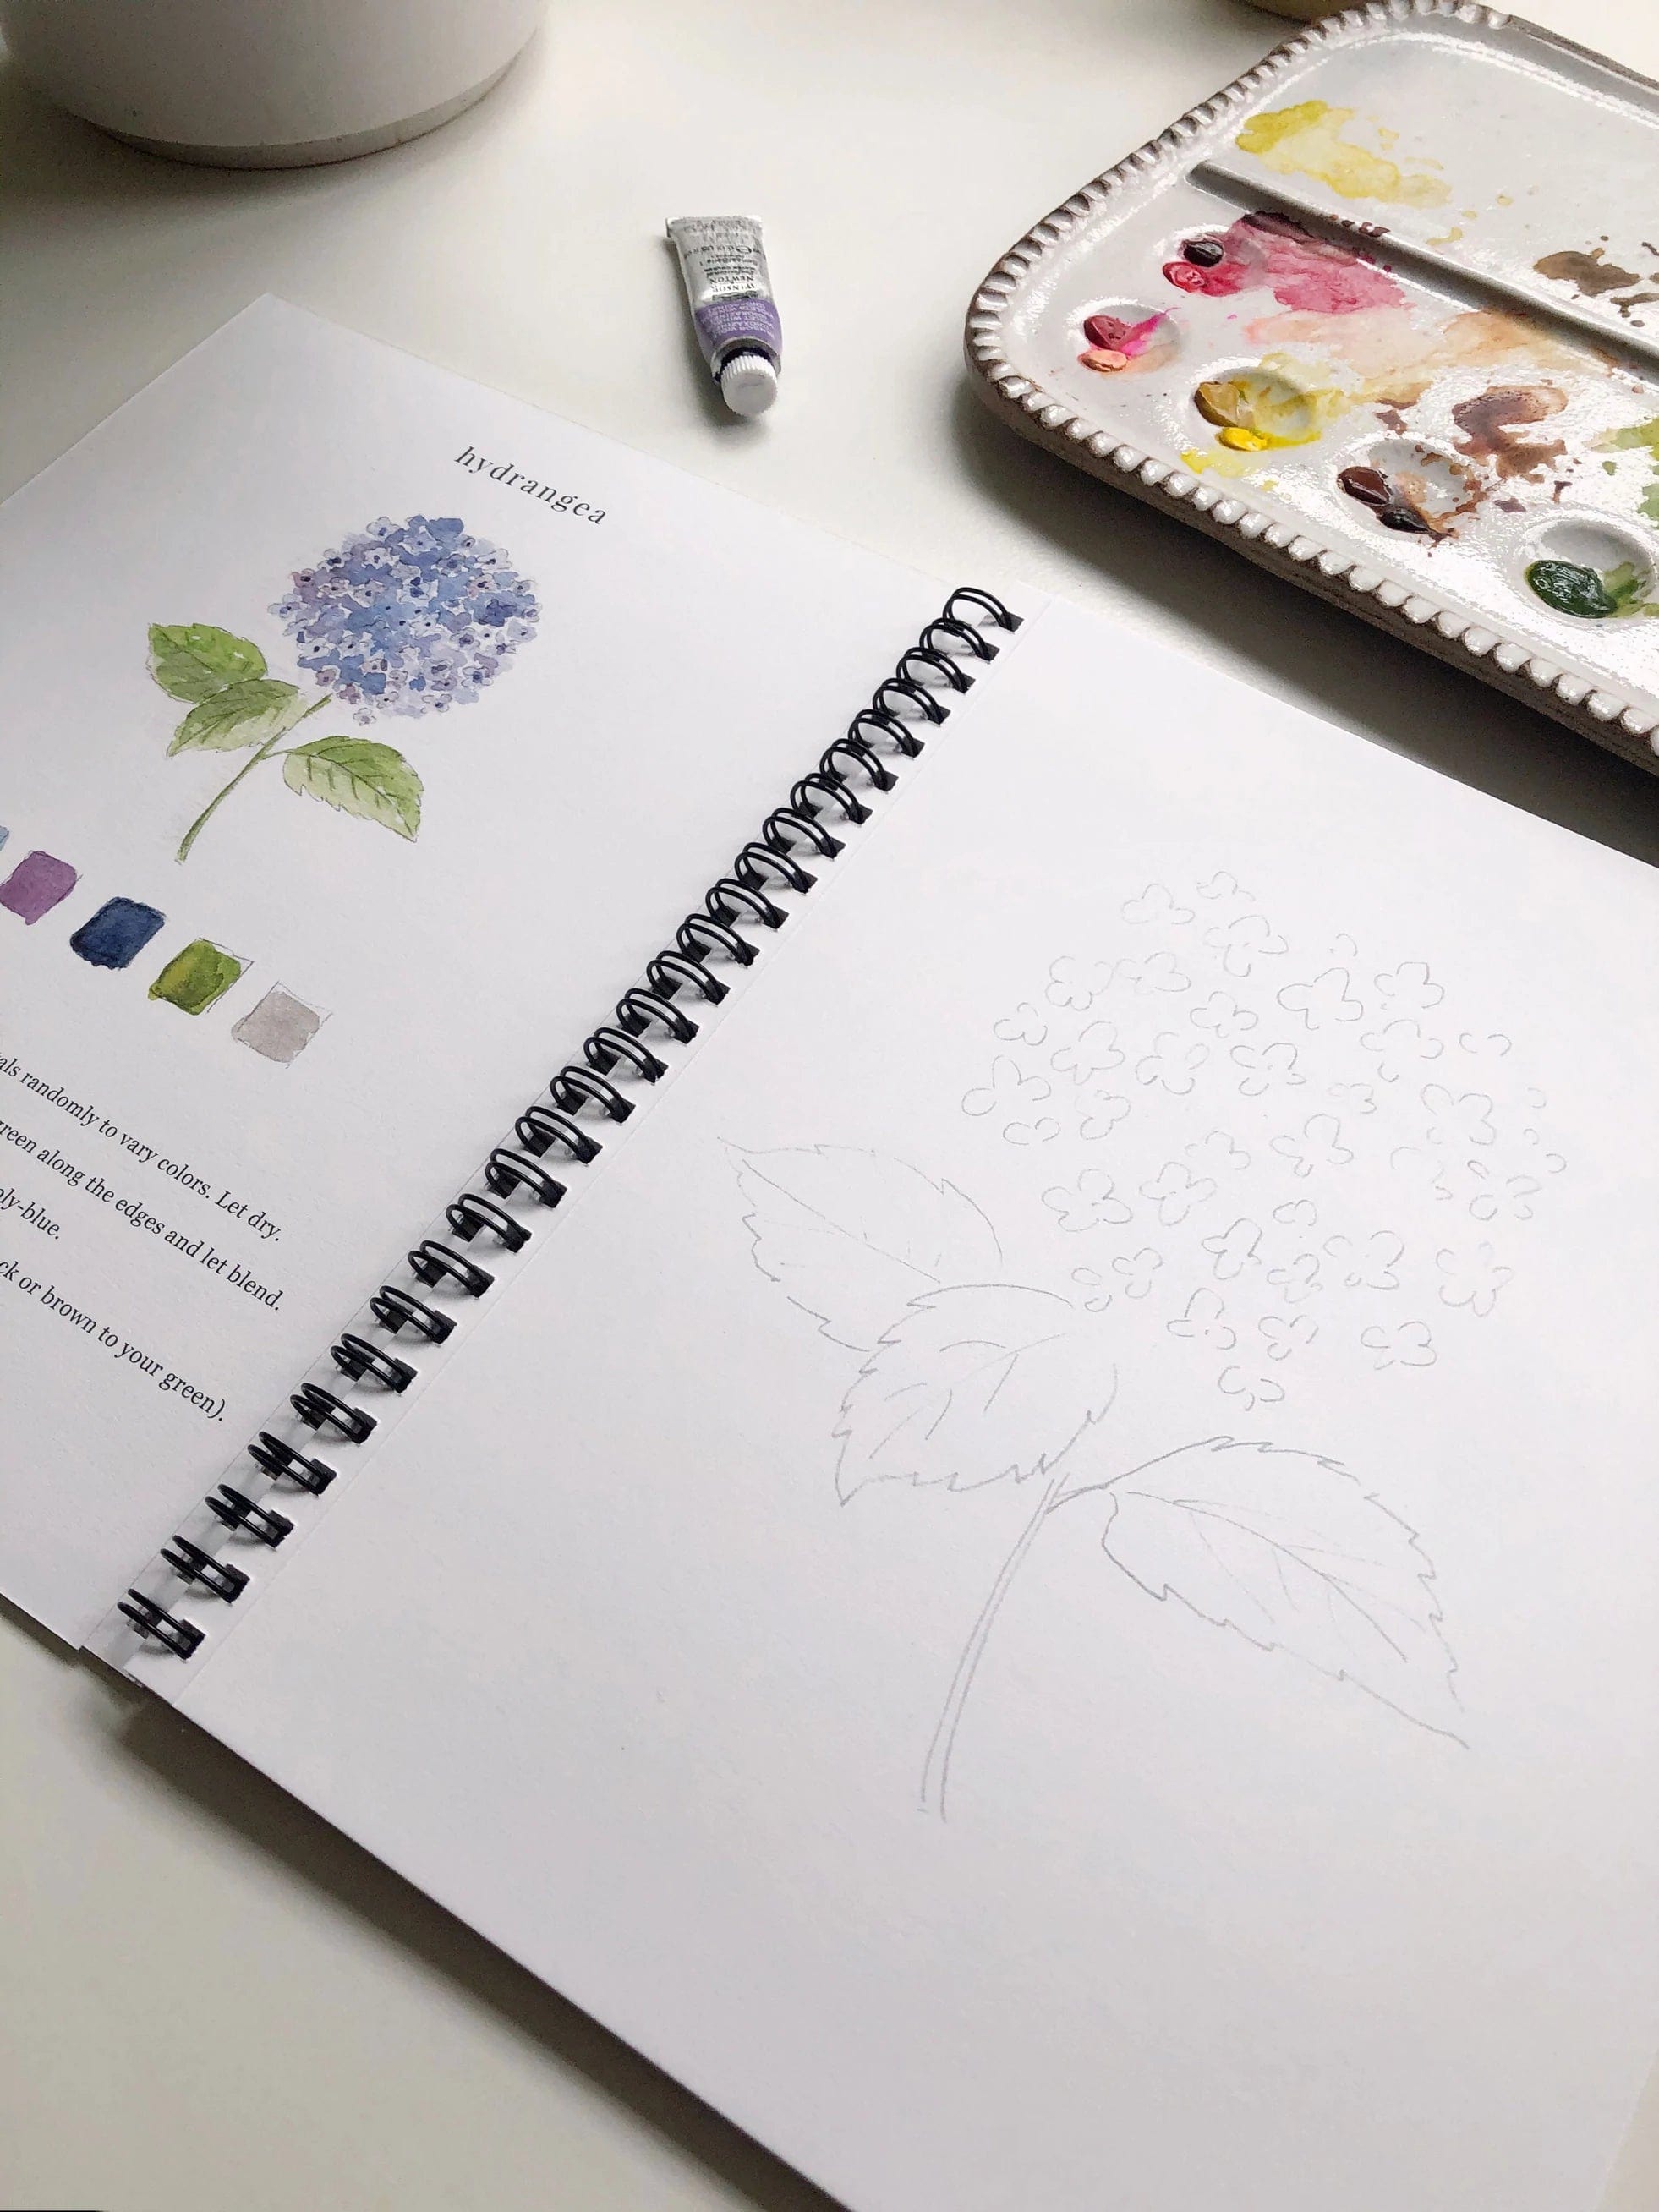 Watercolor Workbook: Flowers – Paper Luxe